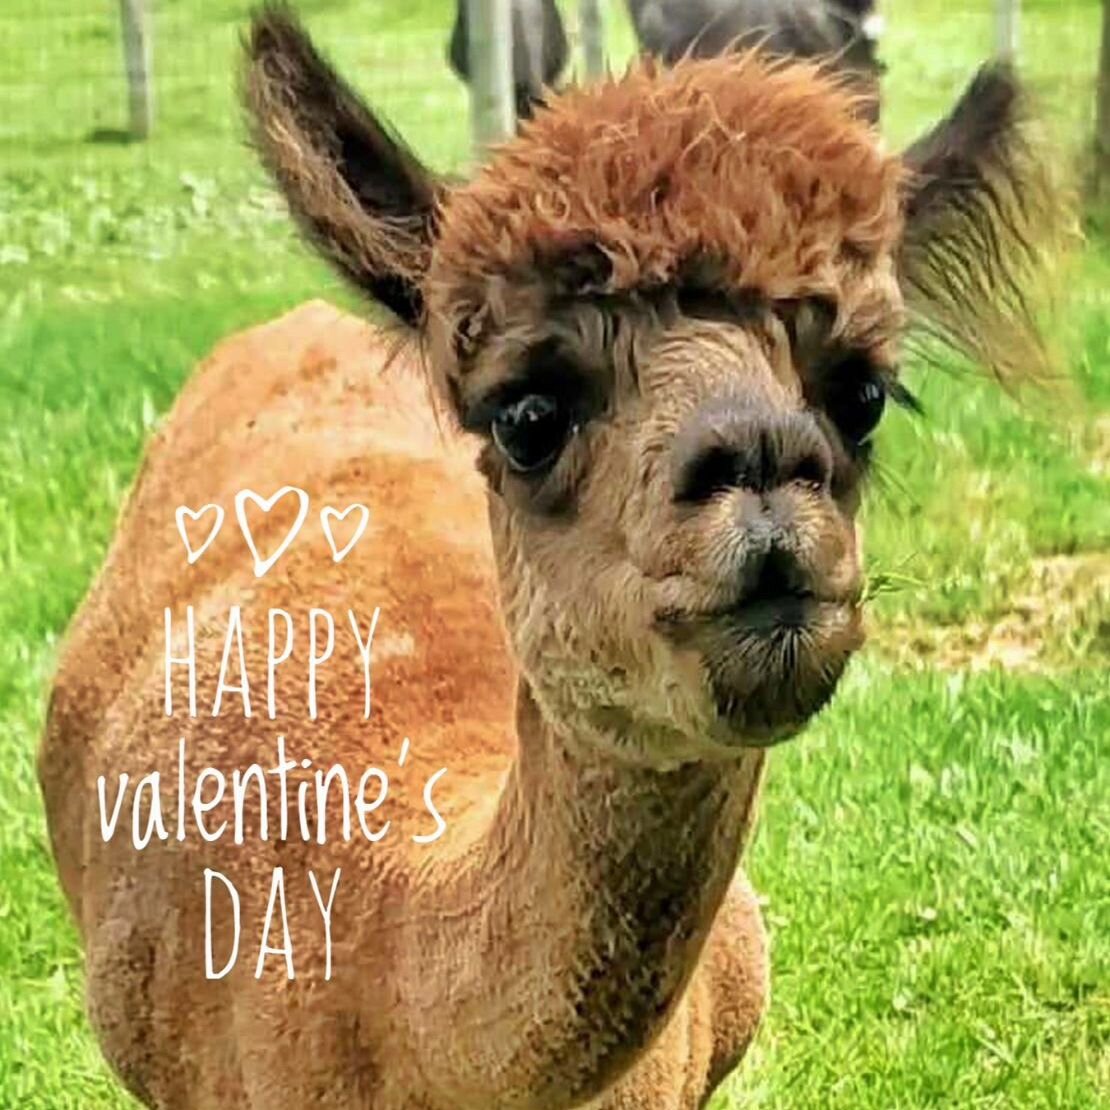 Happy Valentine's Day from Brownie and the rest of us! 

#pawsforhumanity #alpacasofinstagram #alpacas #animalsancutary #nonprofit #community